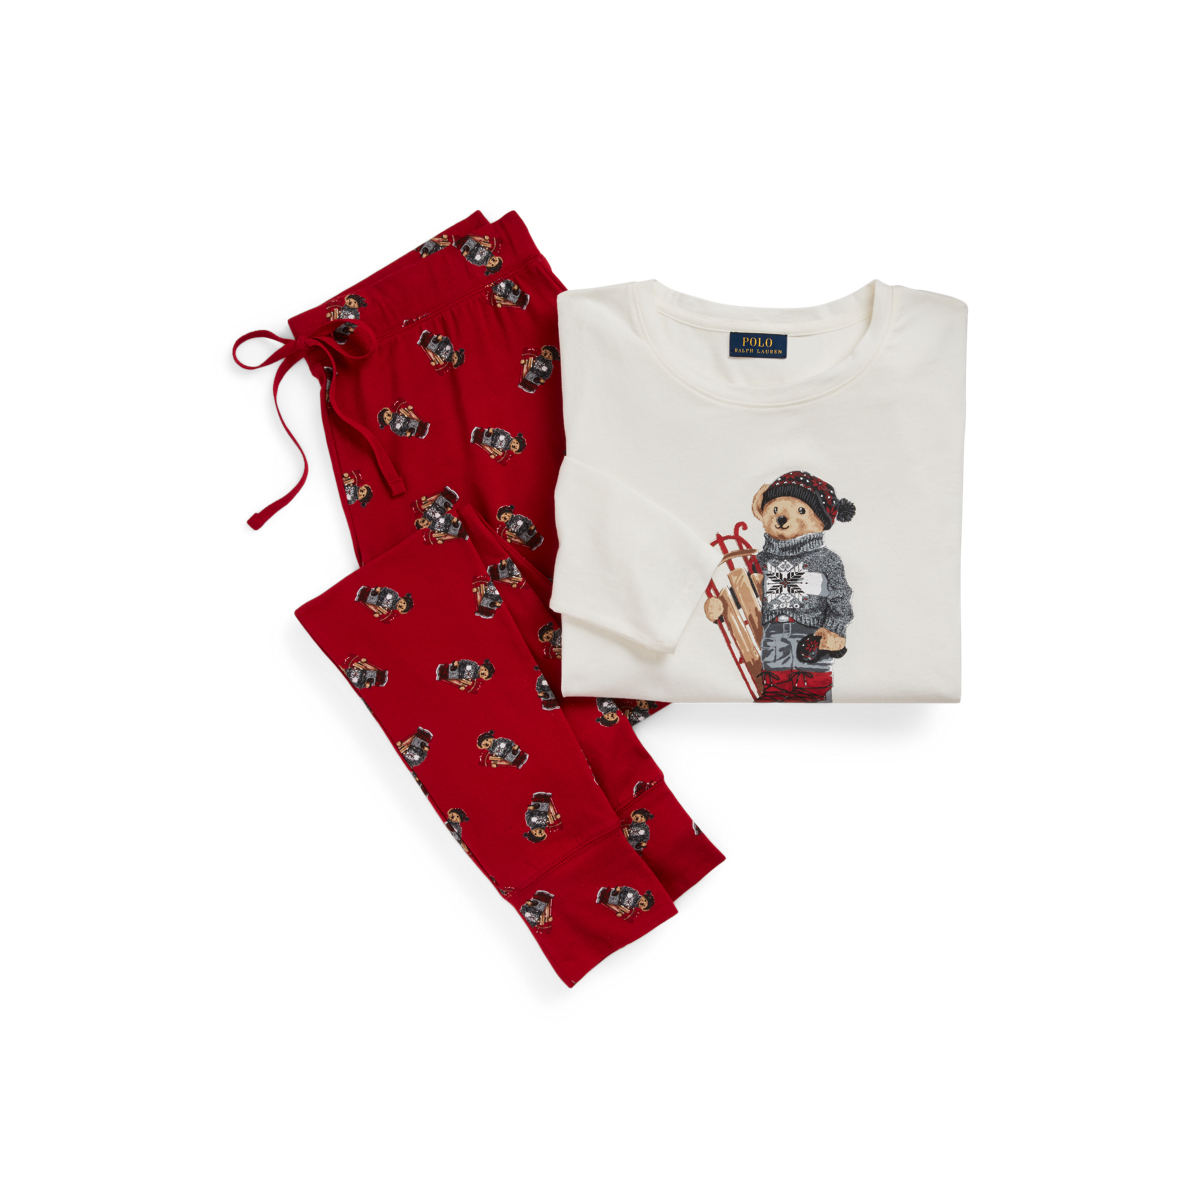 Matching Christmas Pajamas Polo Ralph Lauren Outlet | website.jkuat.ac.ke